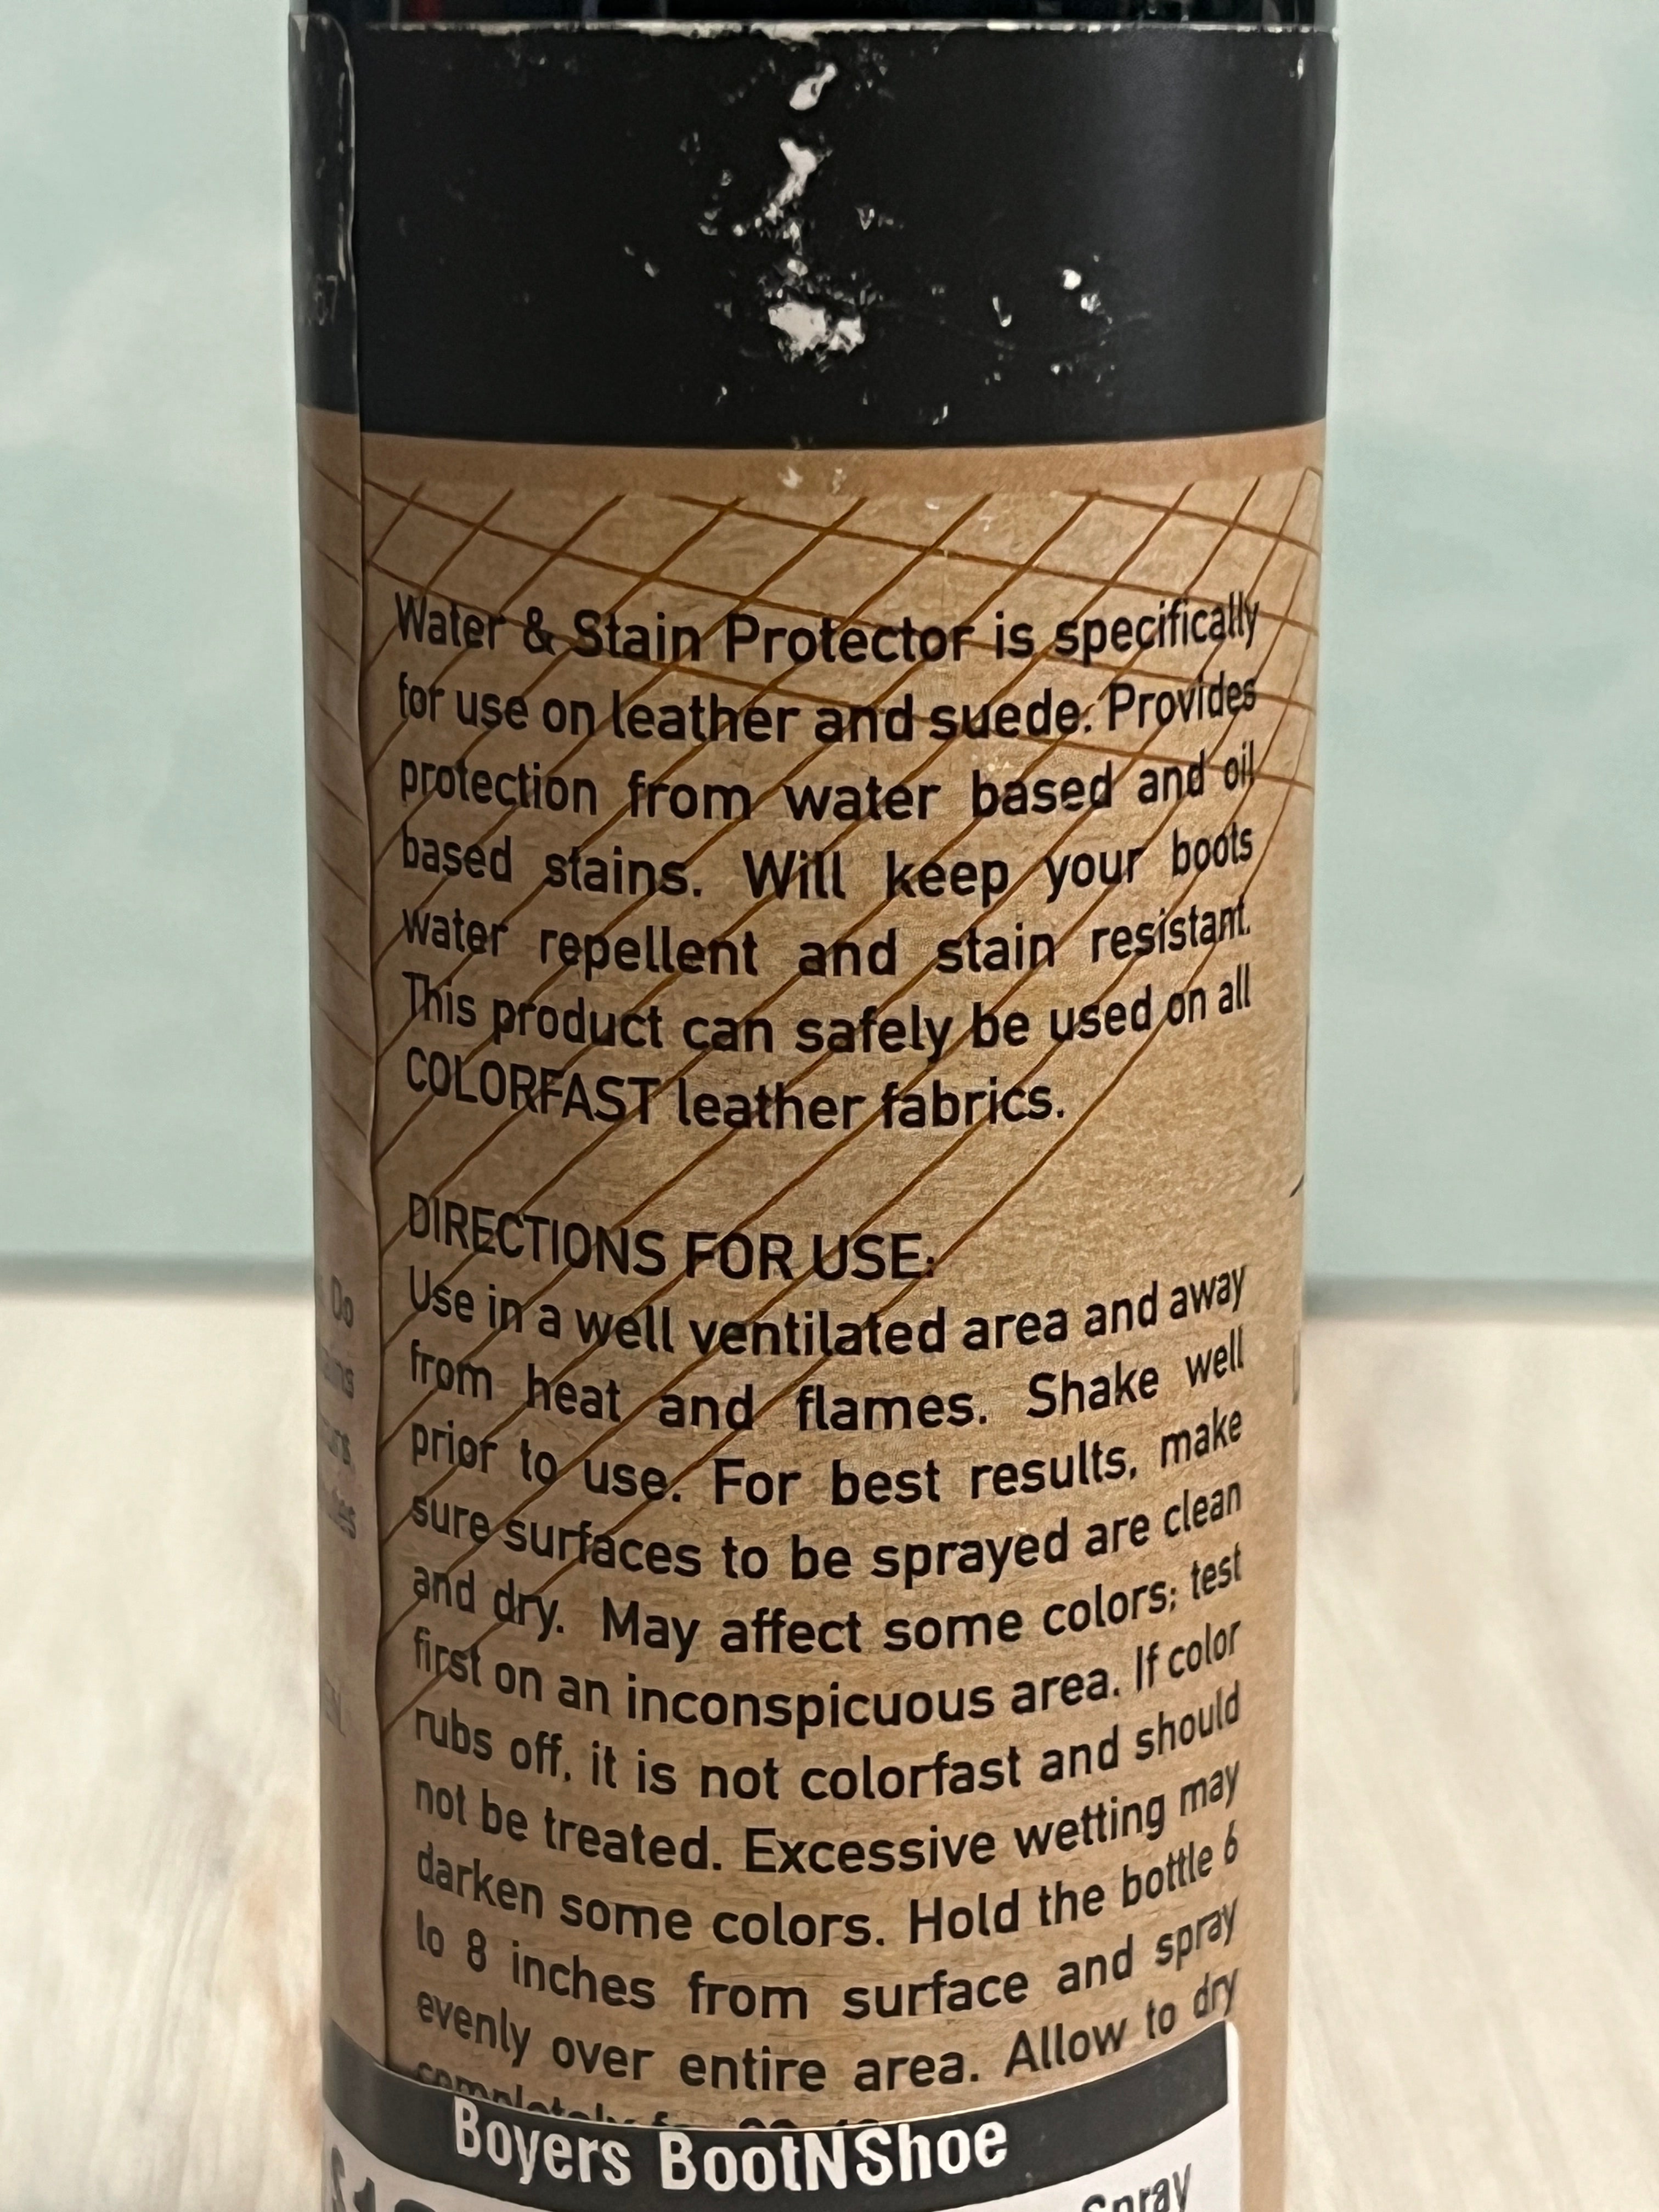 Ariat Water Spray Protector 8oz A27013